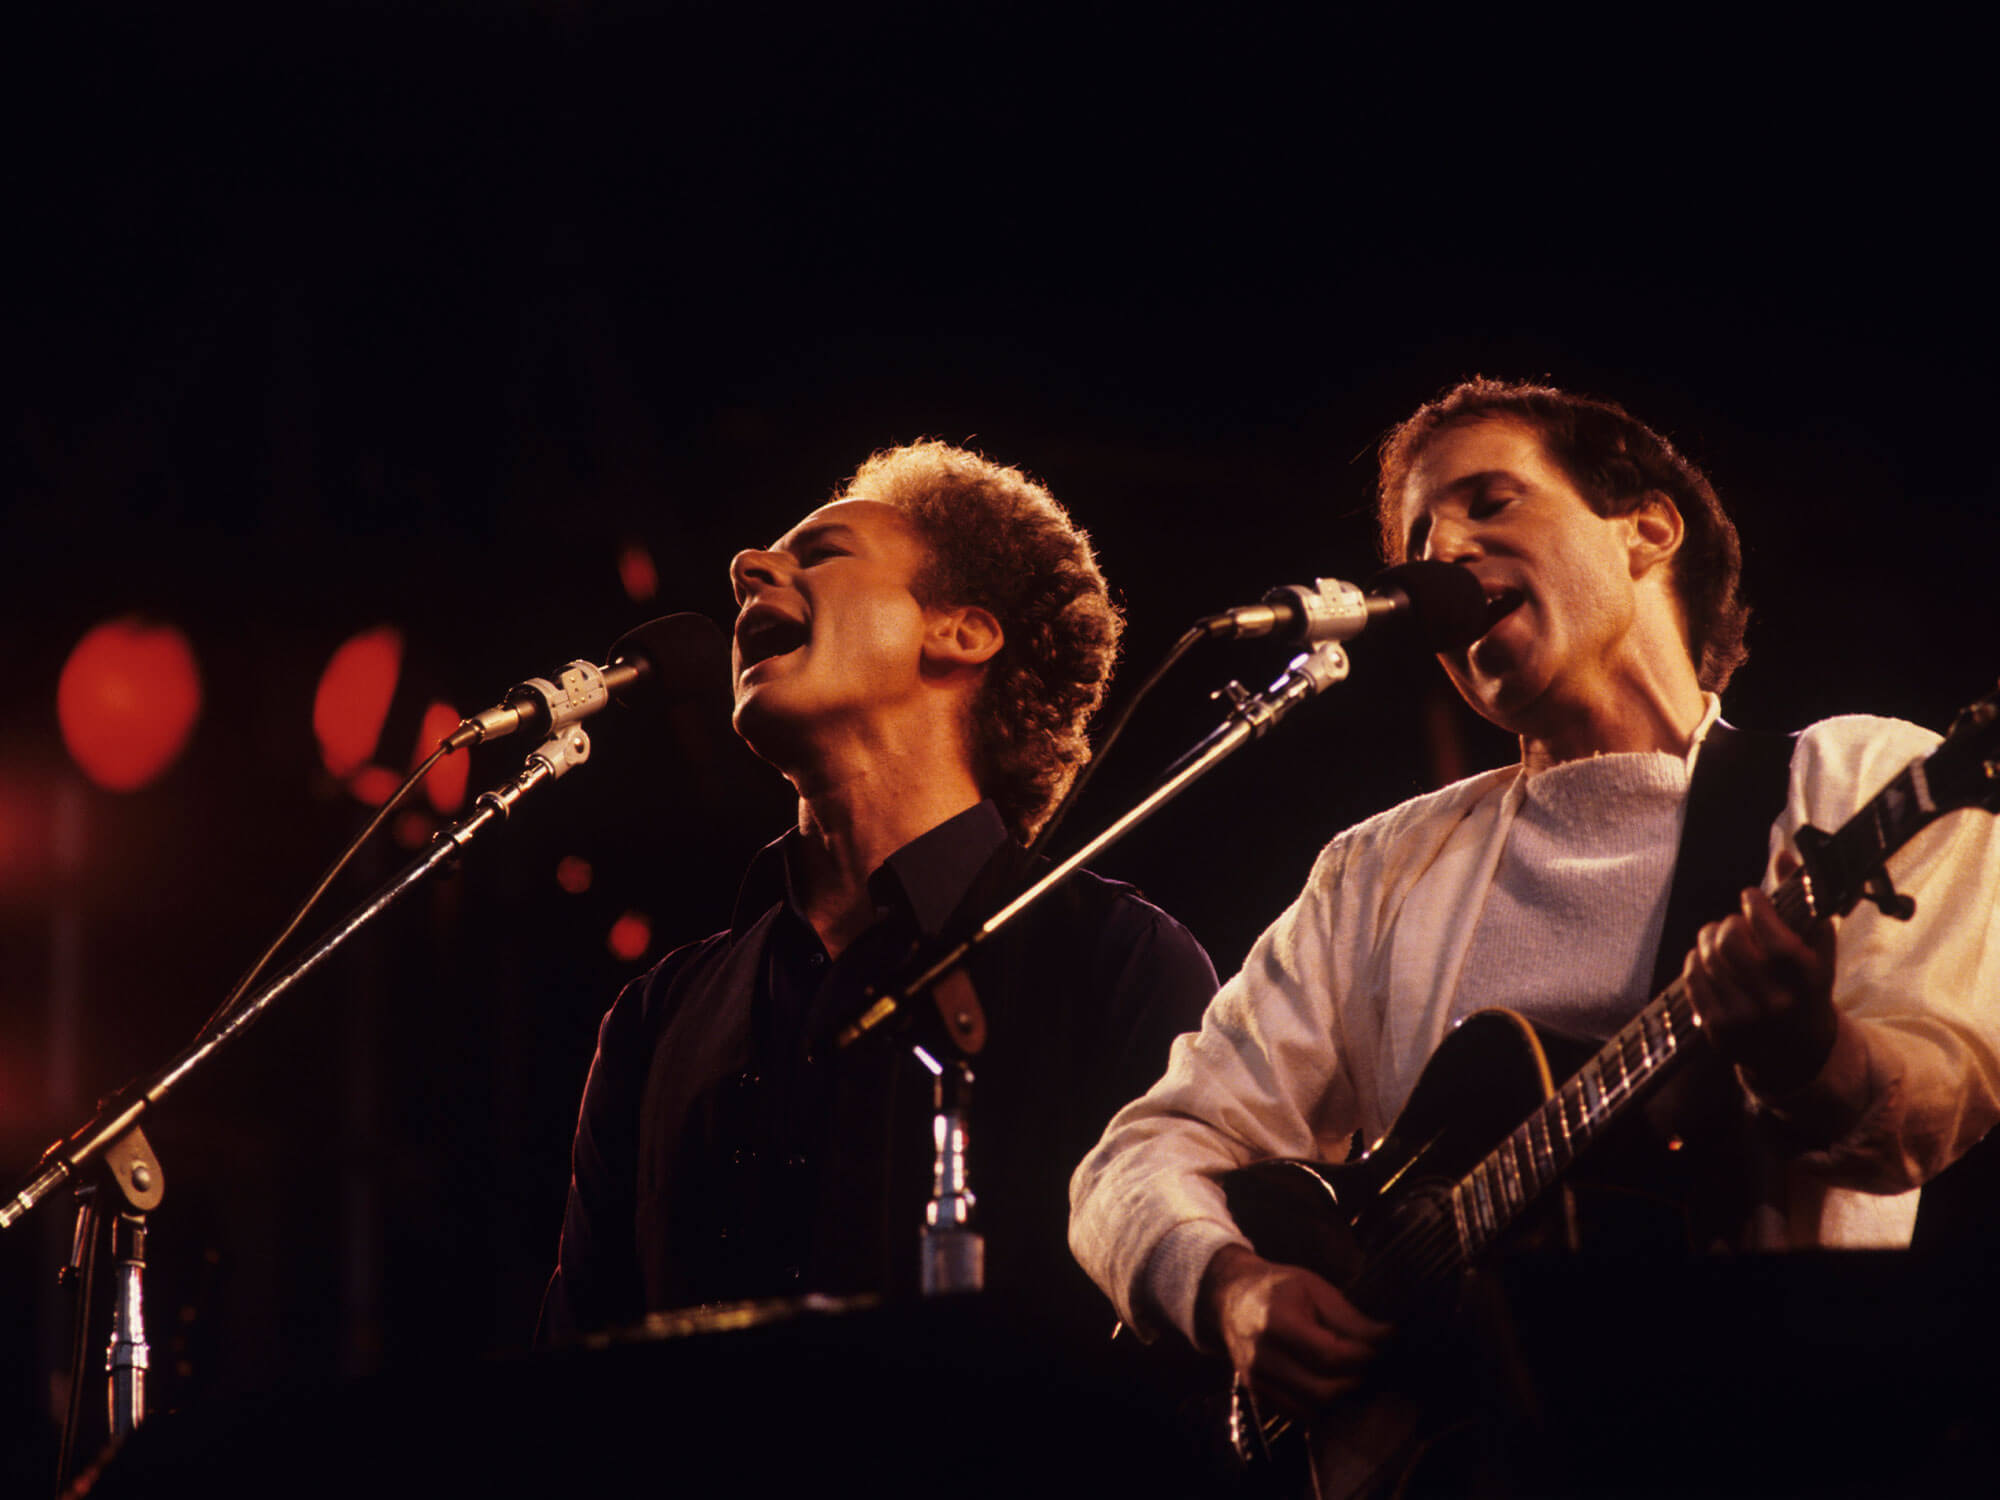 Simon & Garfunkel at Wembley Stadium